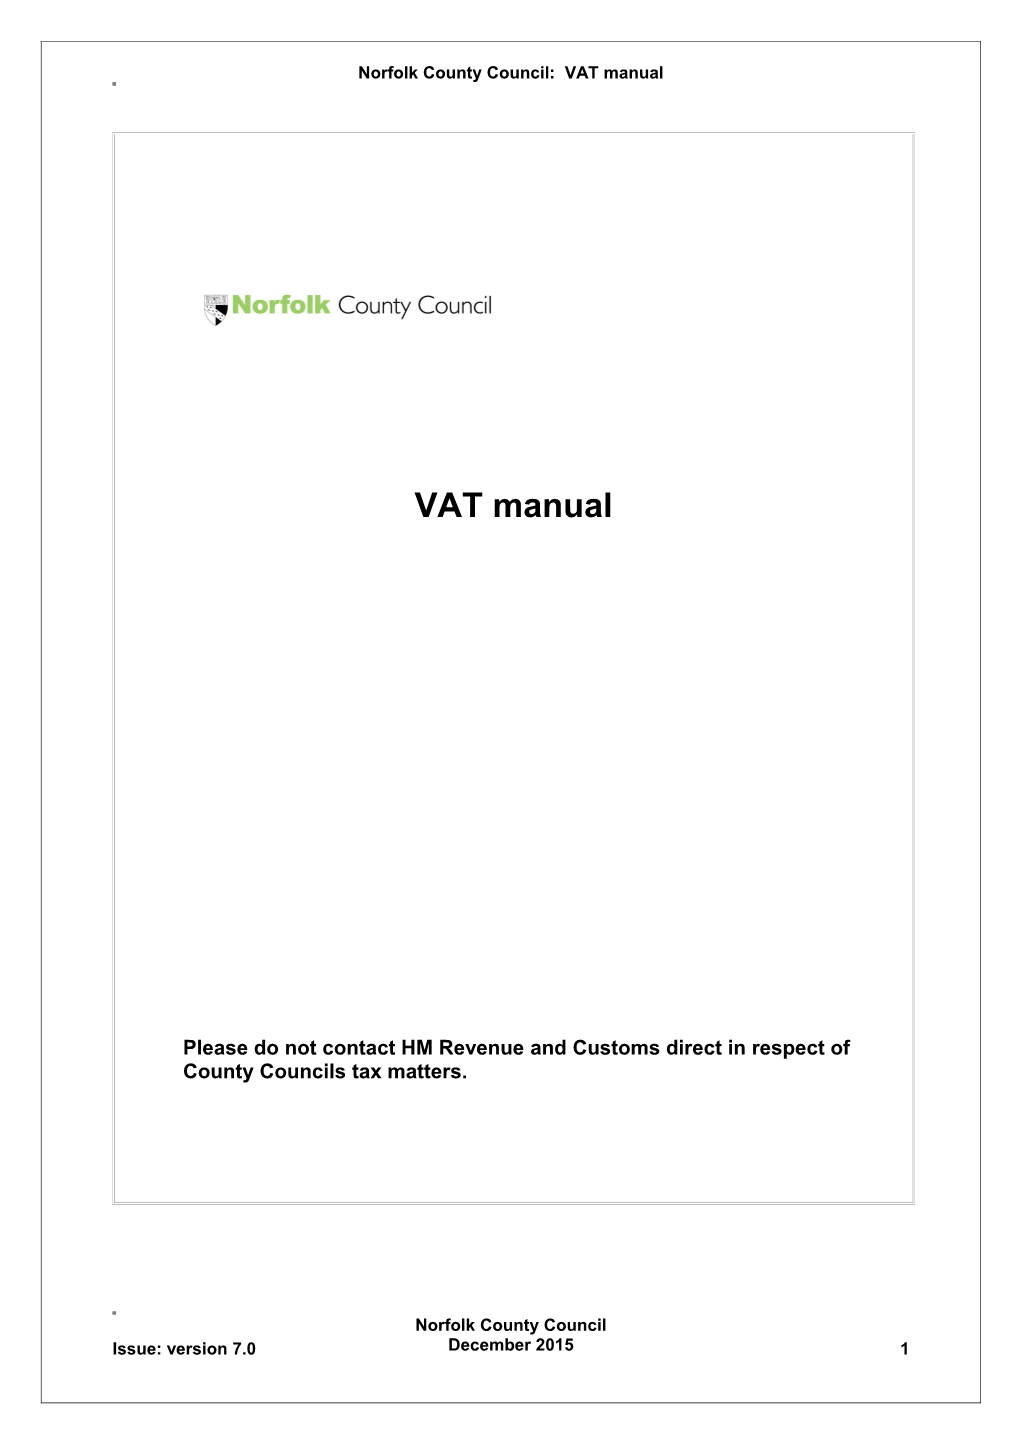 Norfolk County Council: VAT Manual